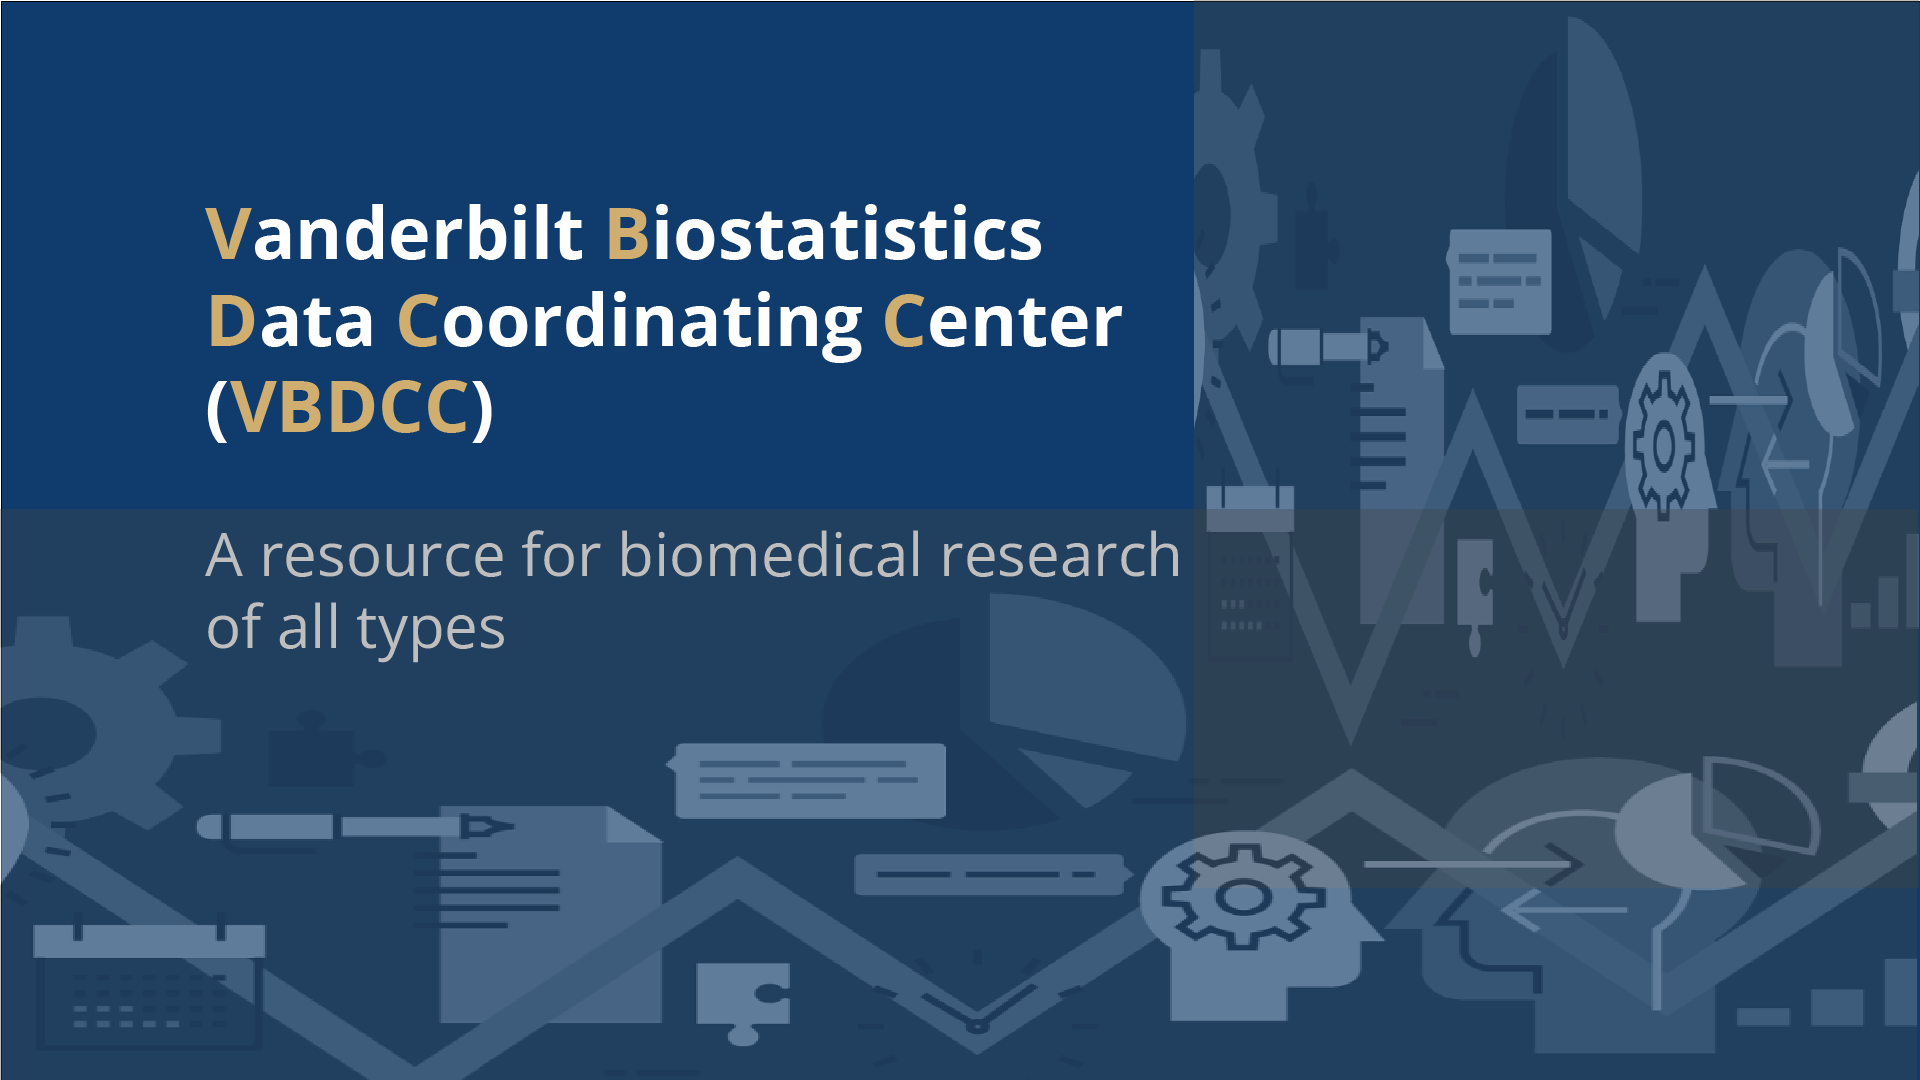 VBDCC title card: Vanderbilt Biostatistics Data Coordinating Center - A resource for biomedical research of all types